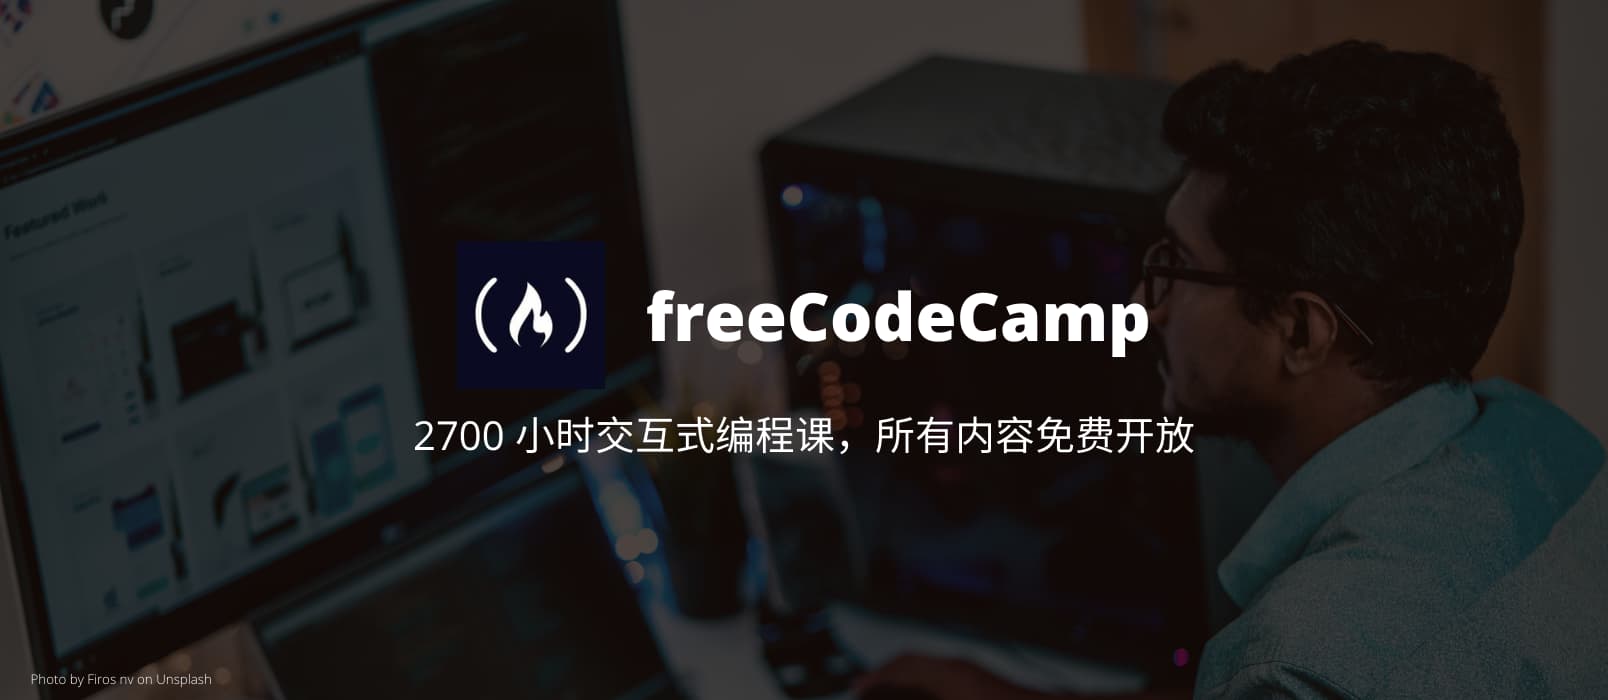 freeCodeCamp -  2700 小时交互式编程课，所有内容免费开放